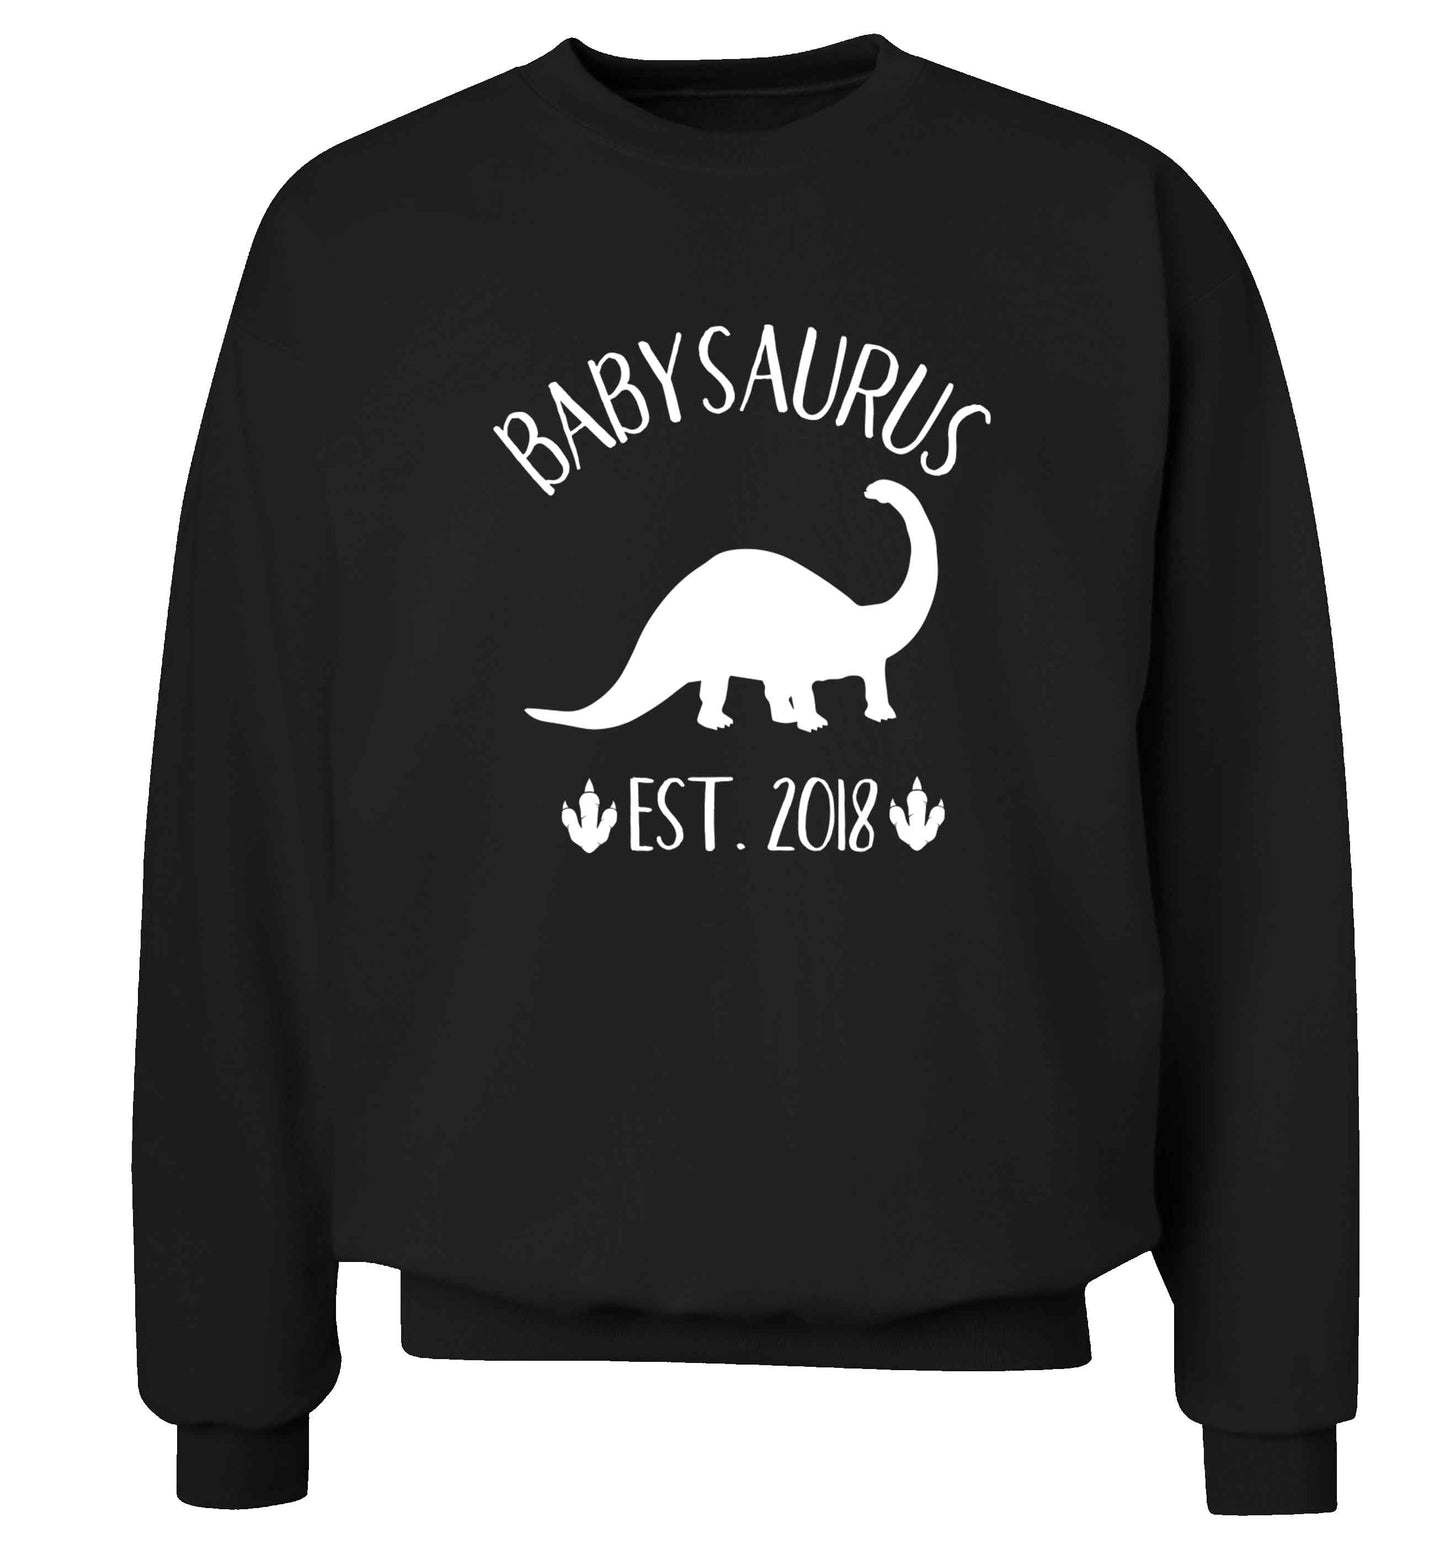 Personalised babysaurus since (custom date) Adult's unisex black Sweater 2XL